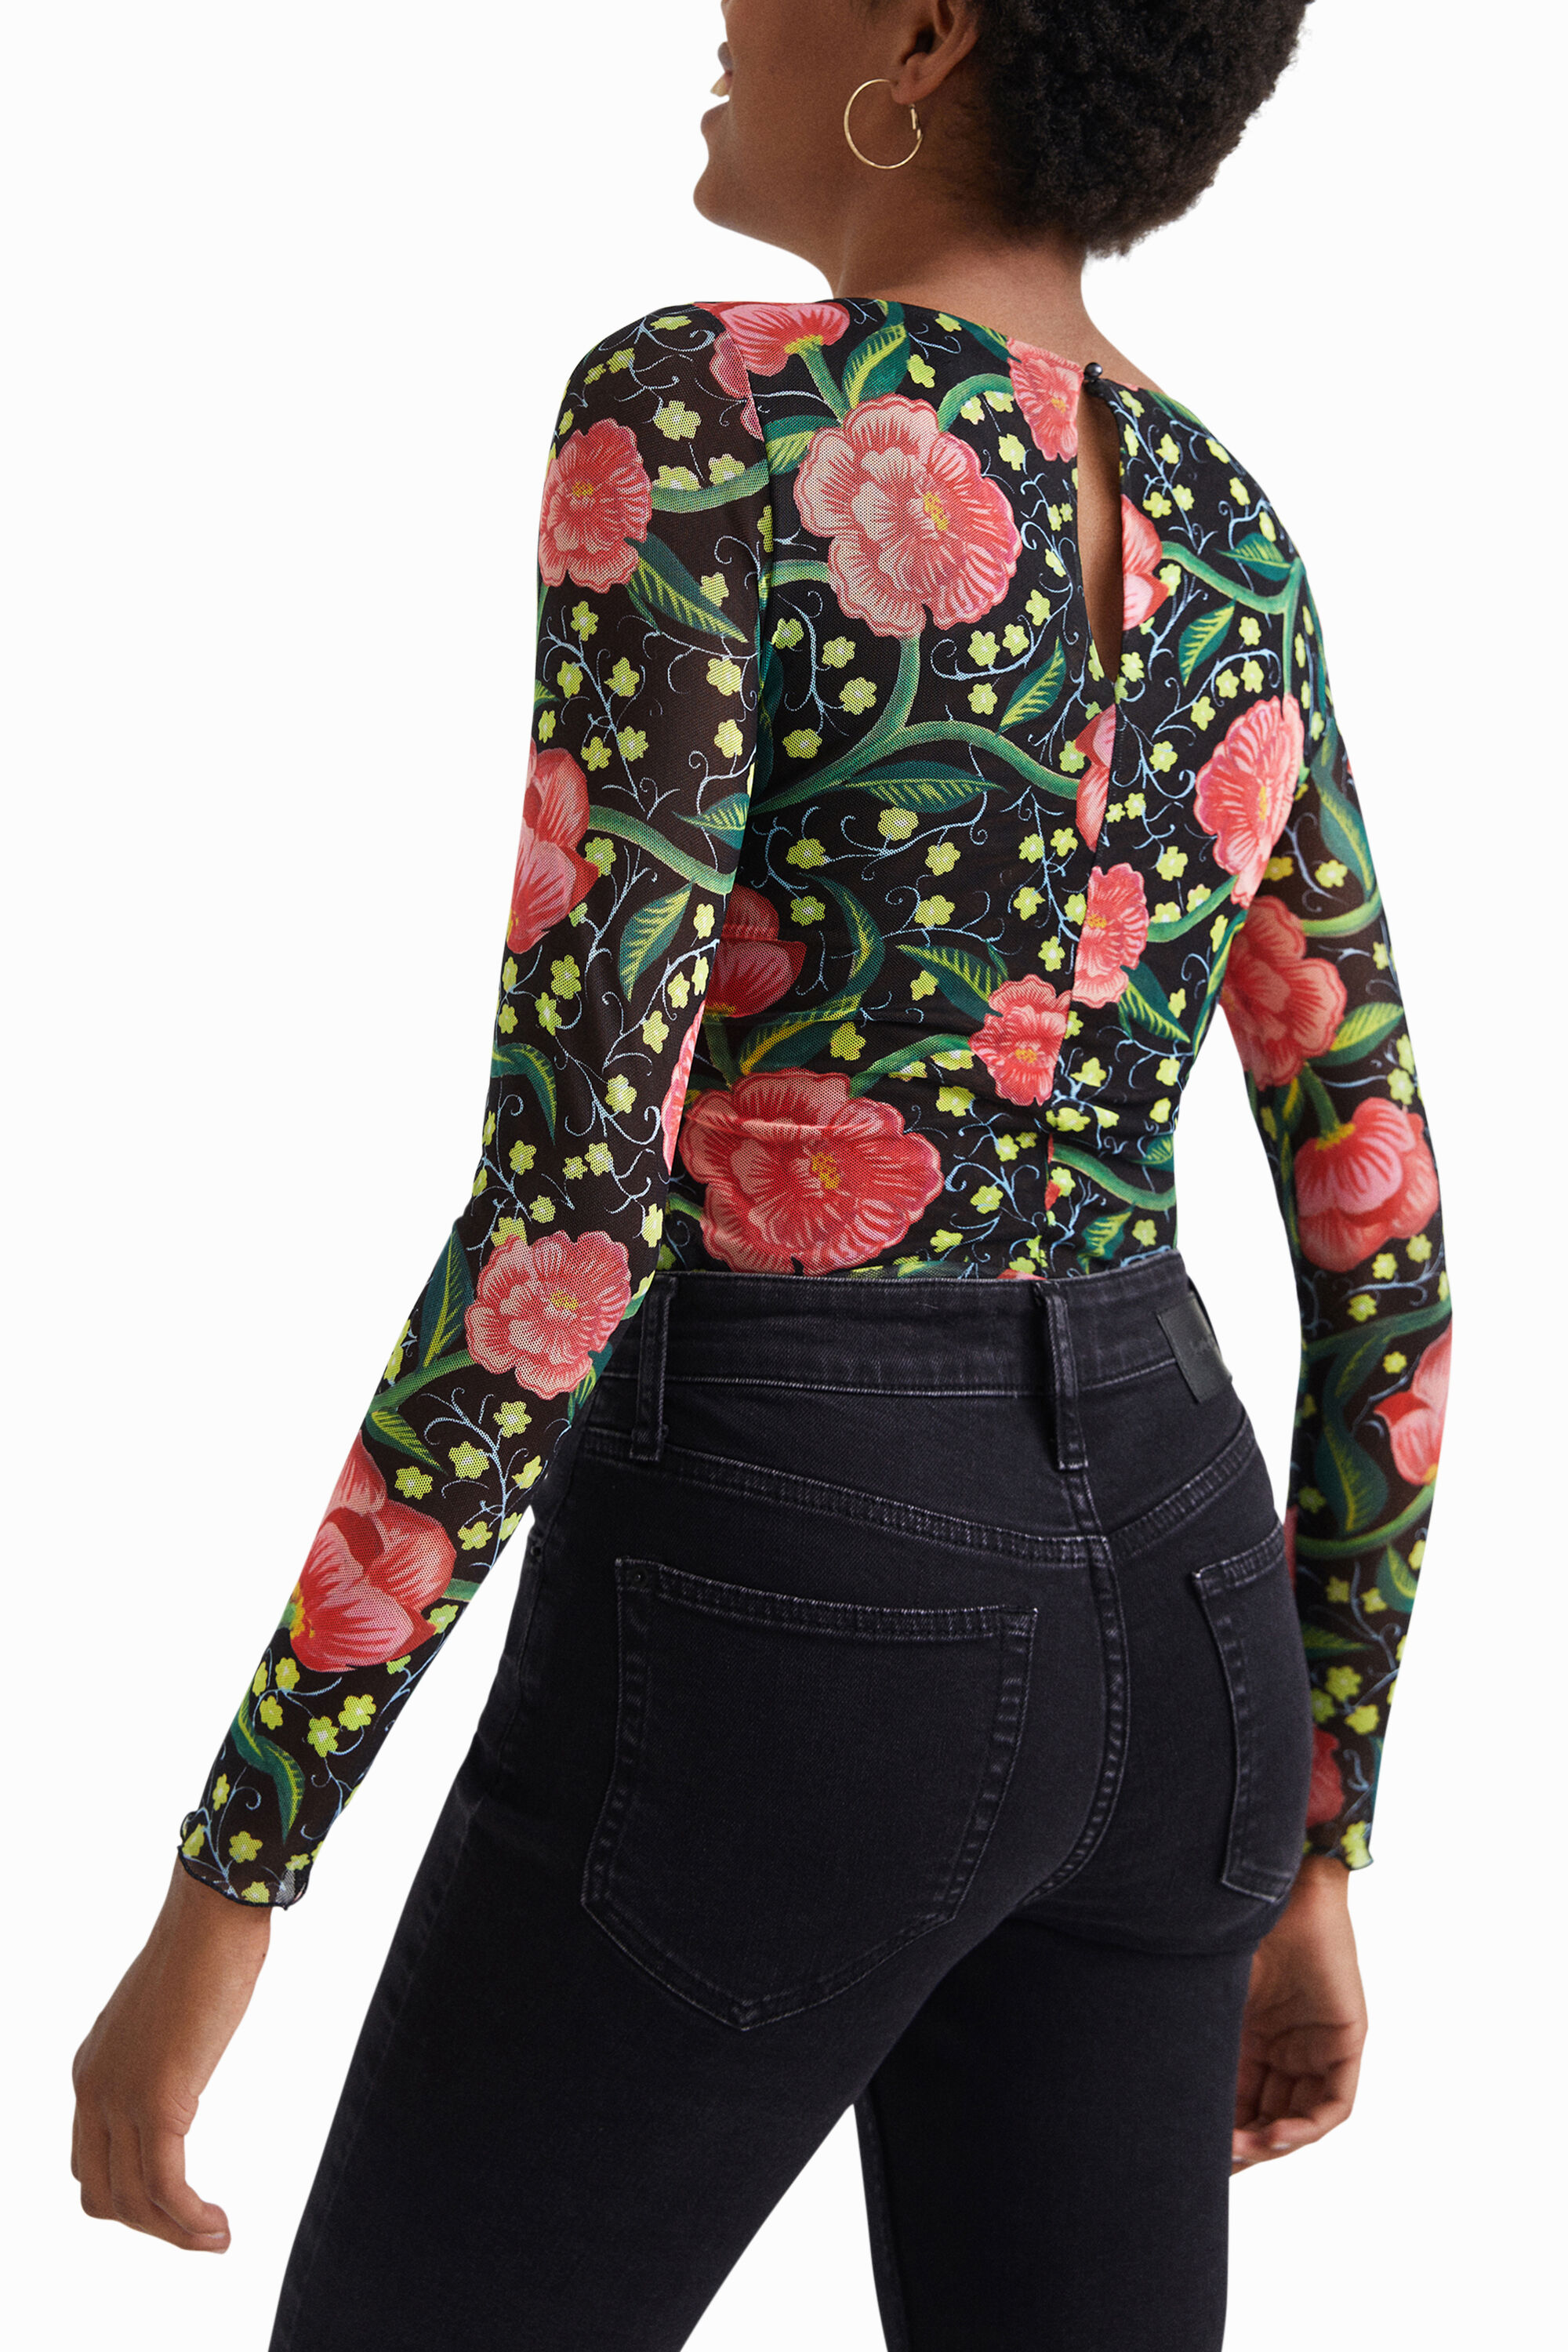 Slim floral bodysuit